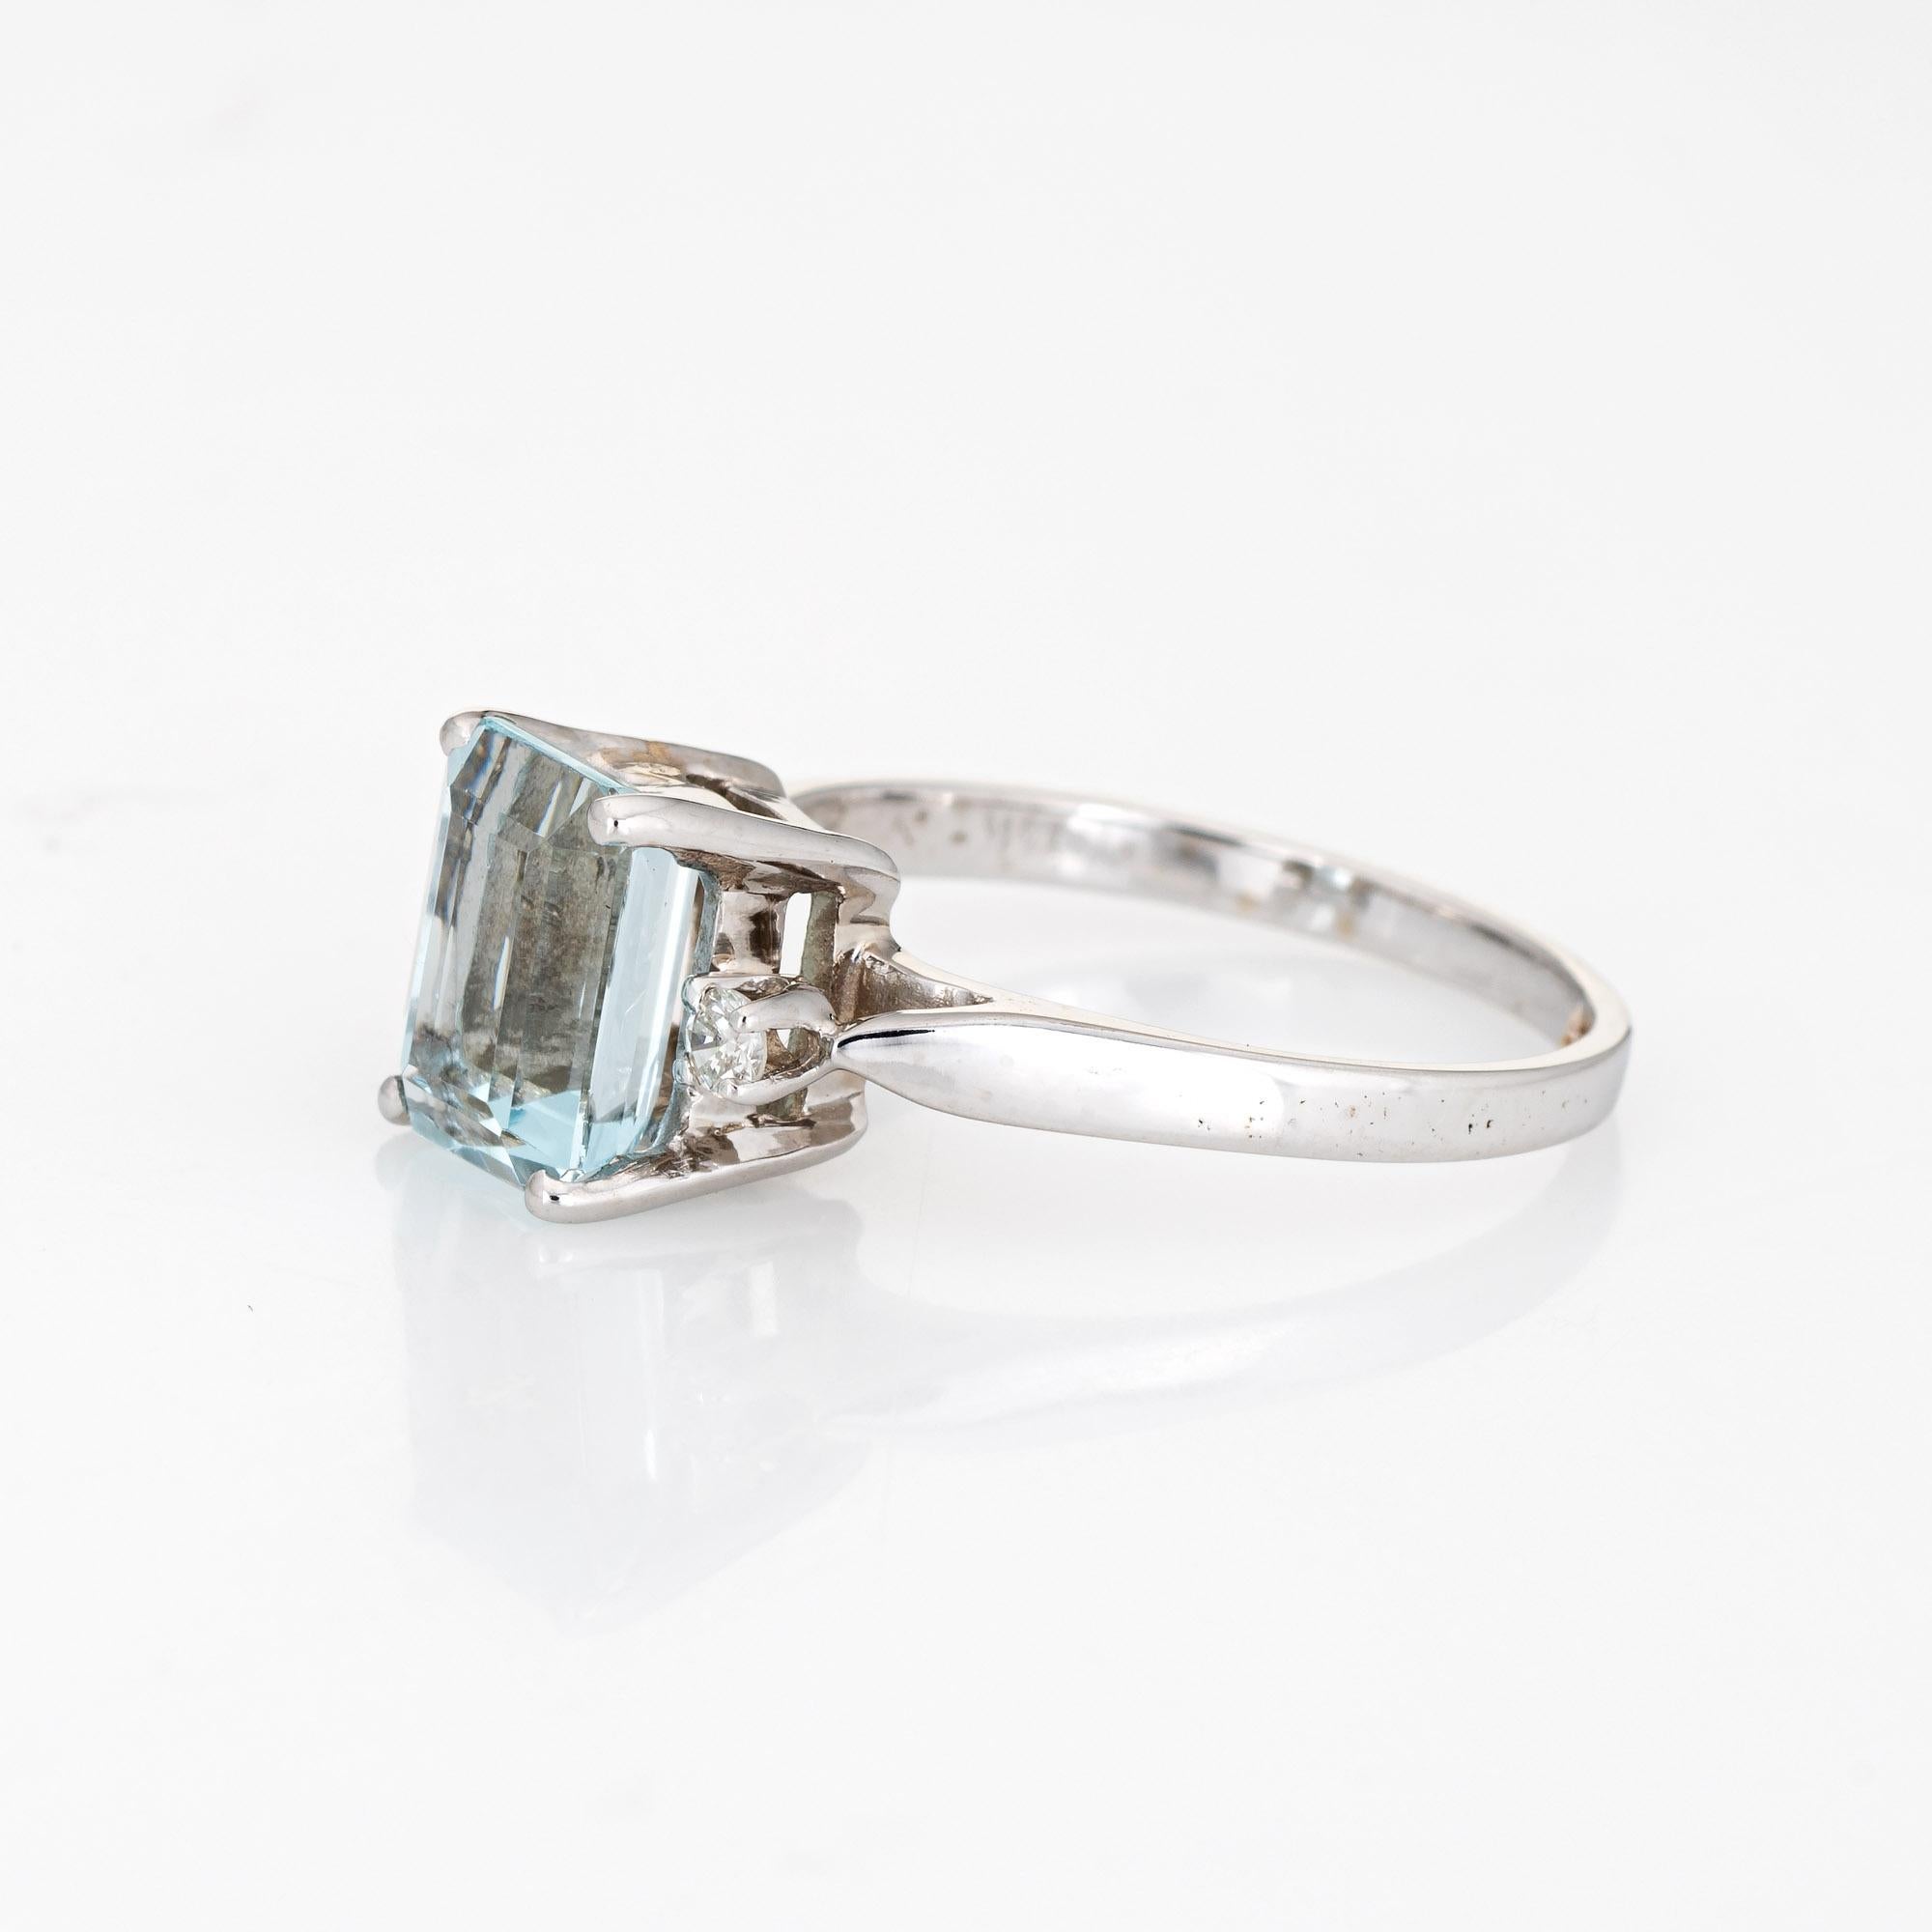 Emerald Cut 2.65 Carat Aquamarine Diamond Ring Vintage 14 Karat White Gold Gemstone